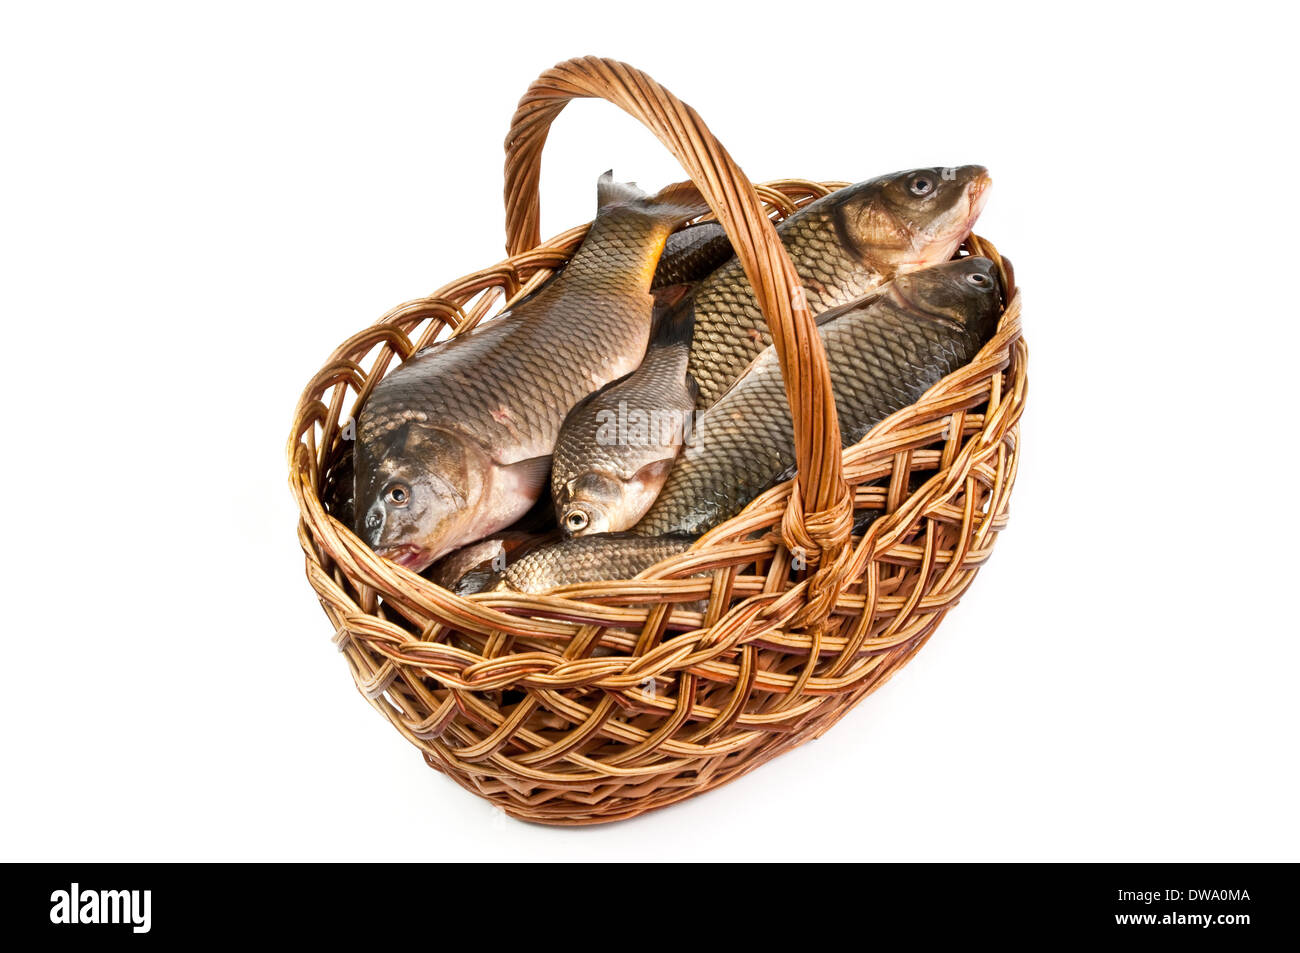 https://c8.alamy.com/comp/DWA0MA/fresh-fish-in-a-basket-isolated-in-white-DWA0MA.jpg